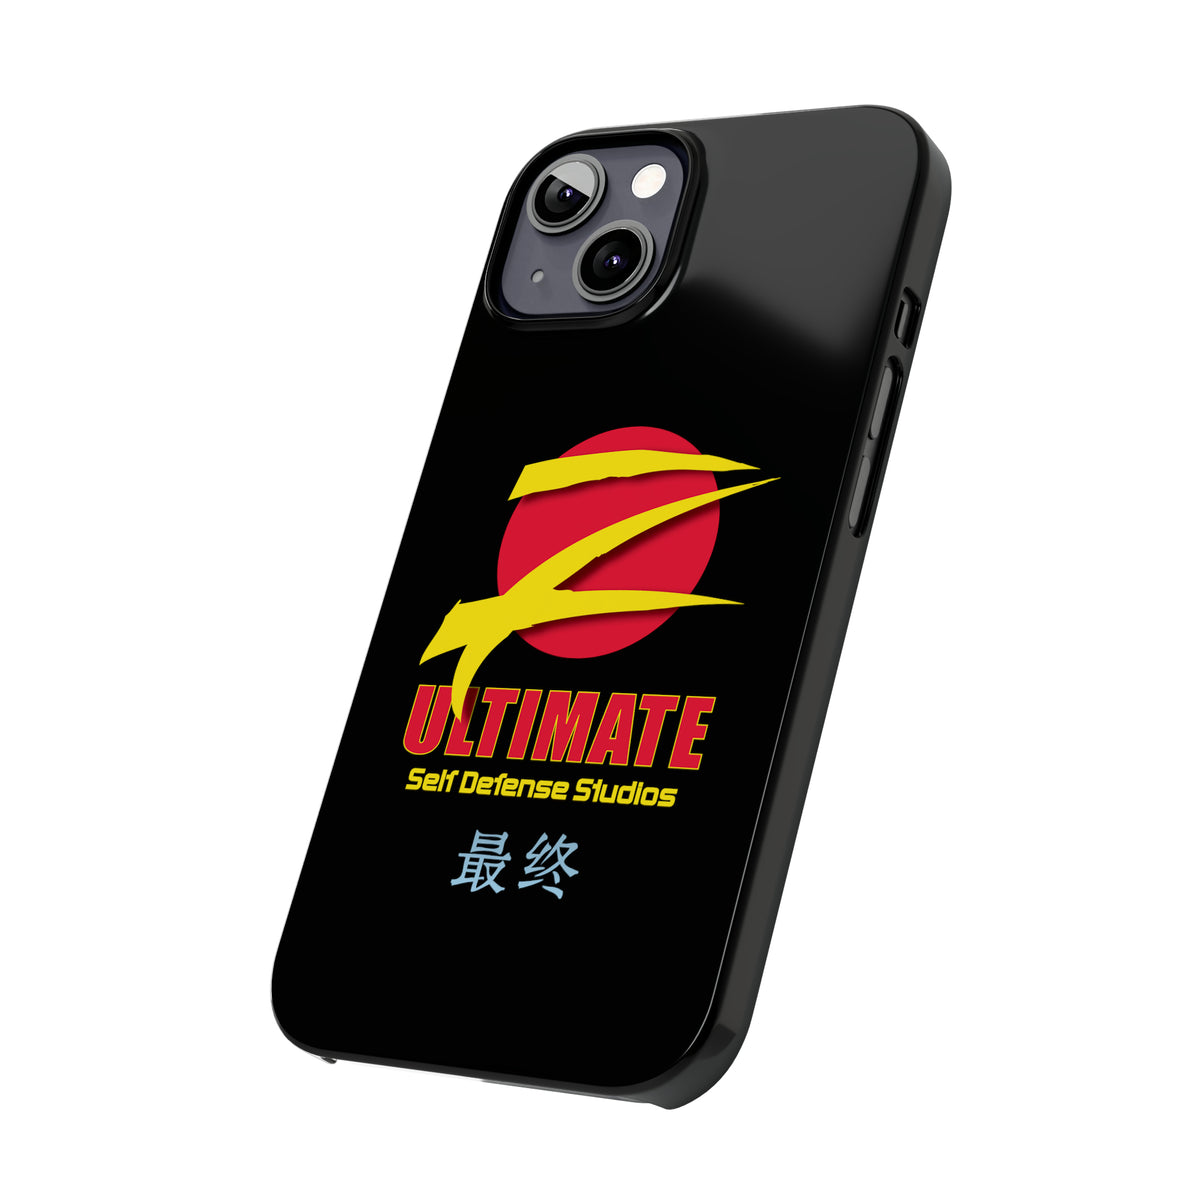 Z-Ultimate &quot;Slim&quot; iPhone Cases